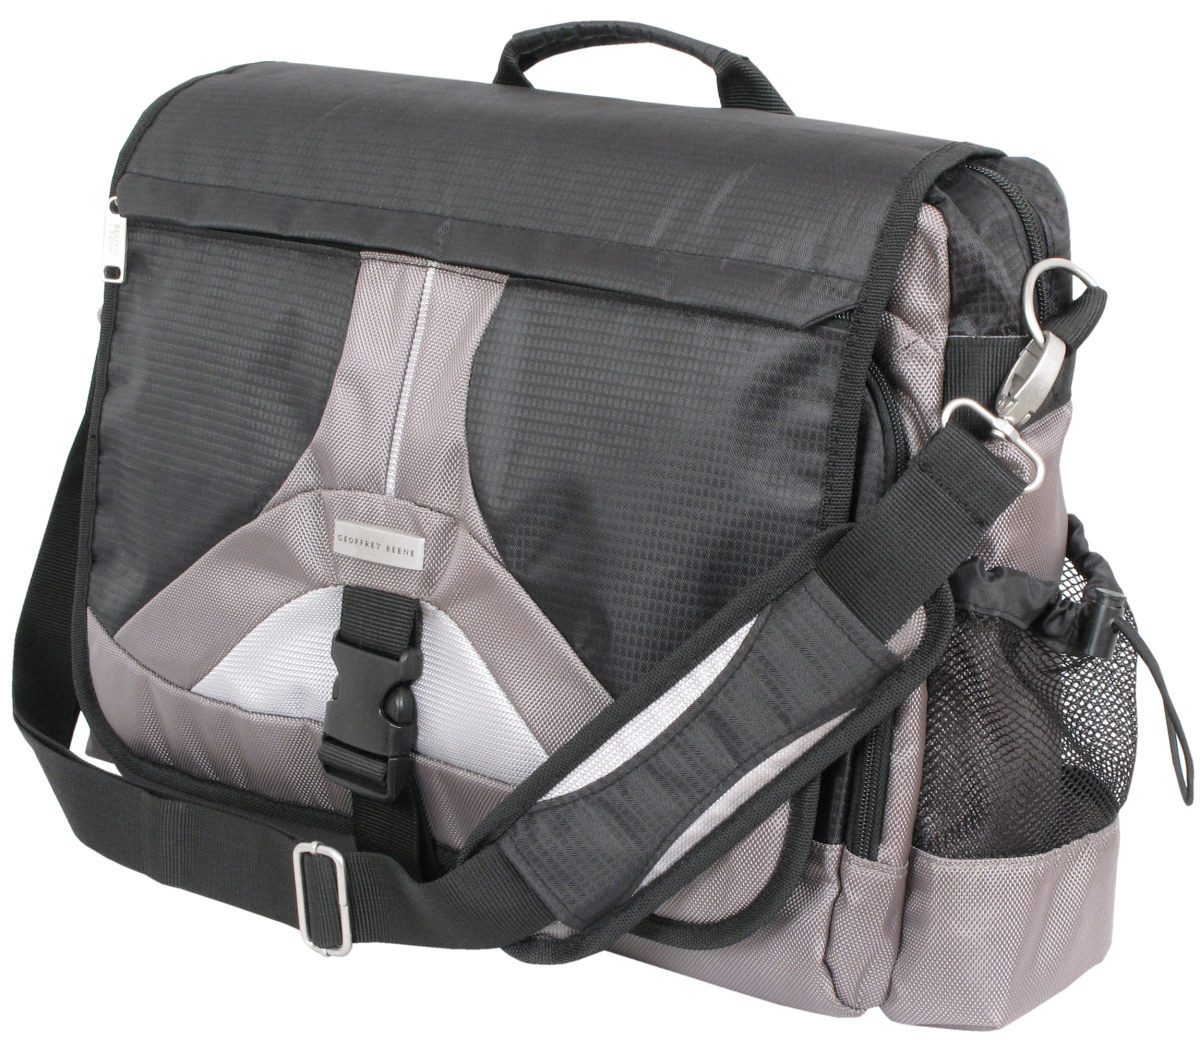 Gb63 17 In. Laptop Messenger Bag, Black & Grey